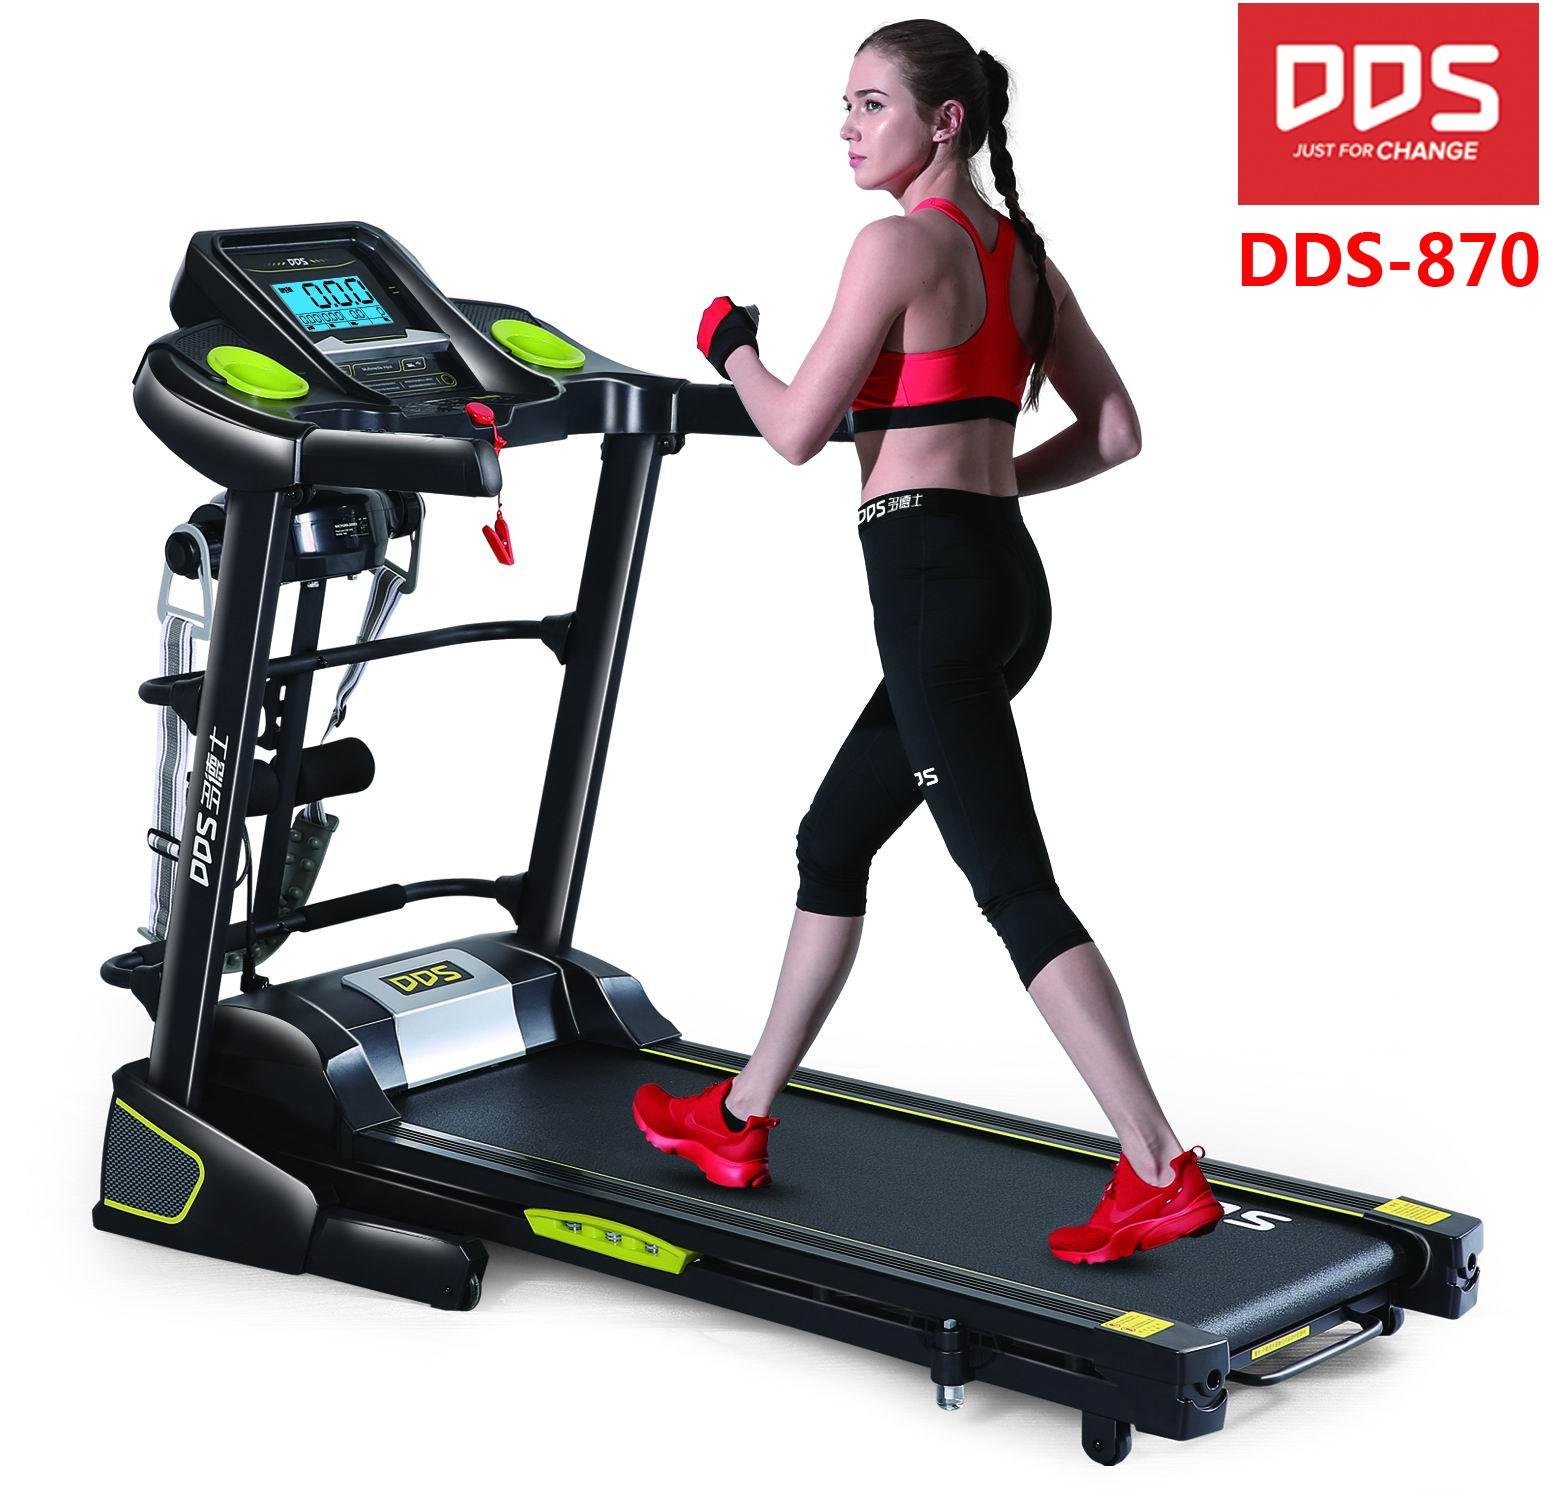 DDS-870 treadmill motorized treadmill home treadmill